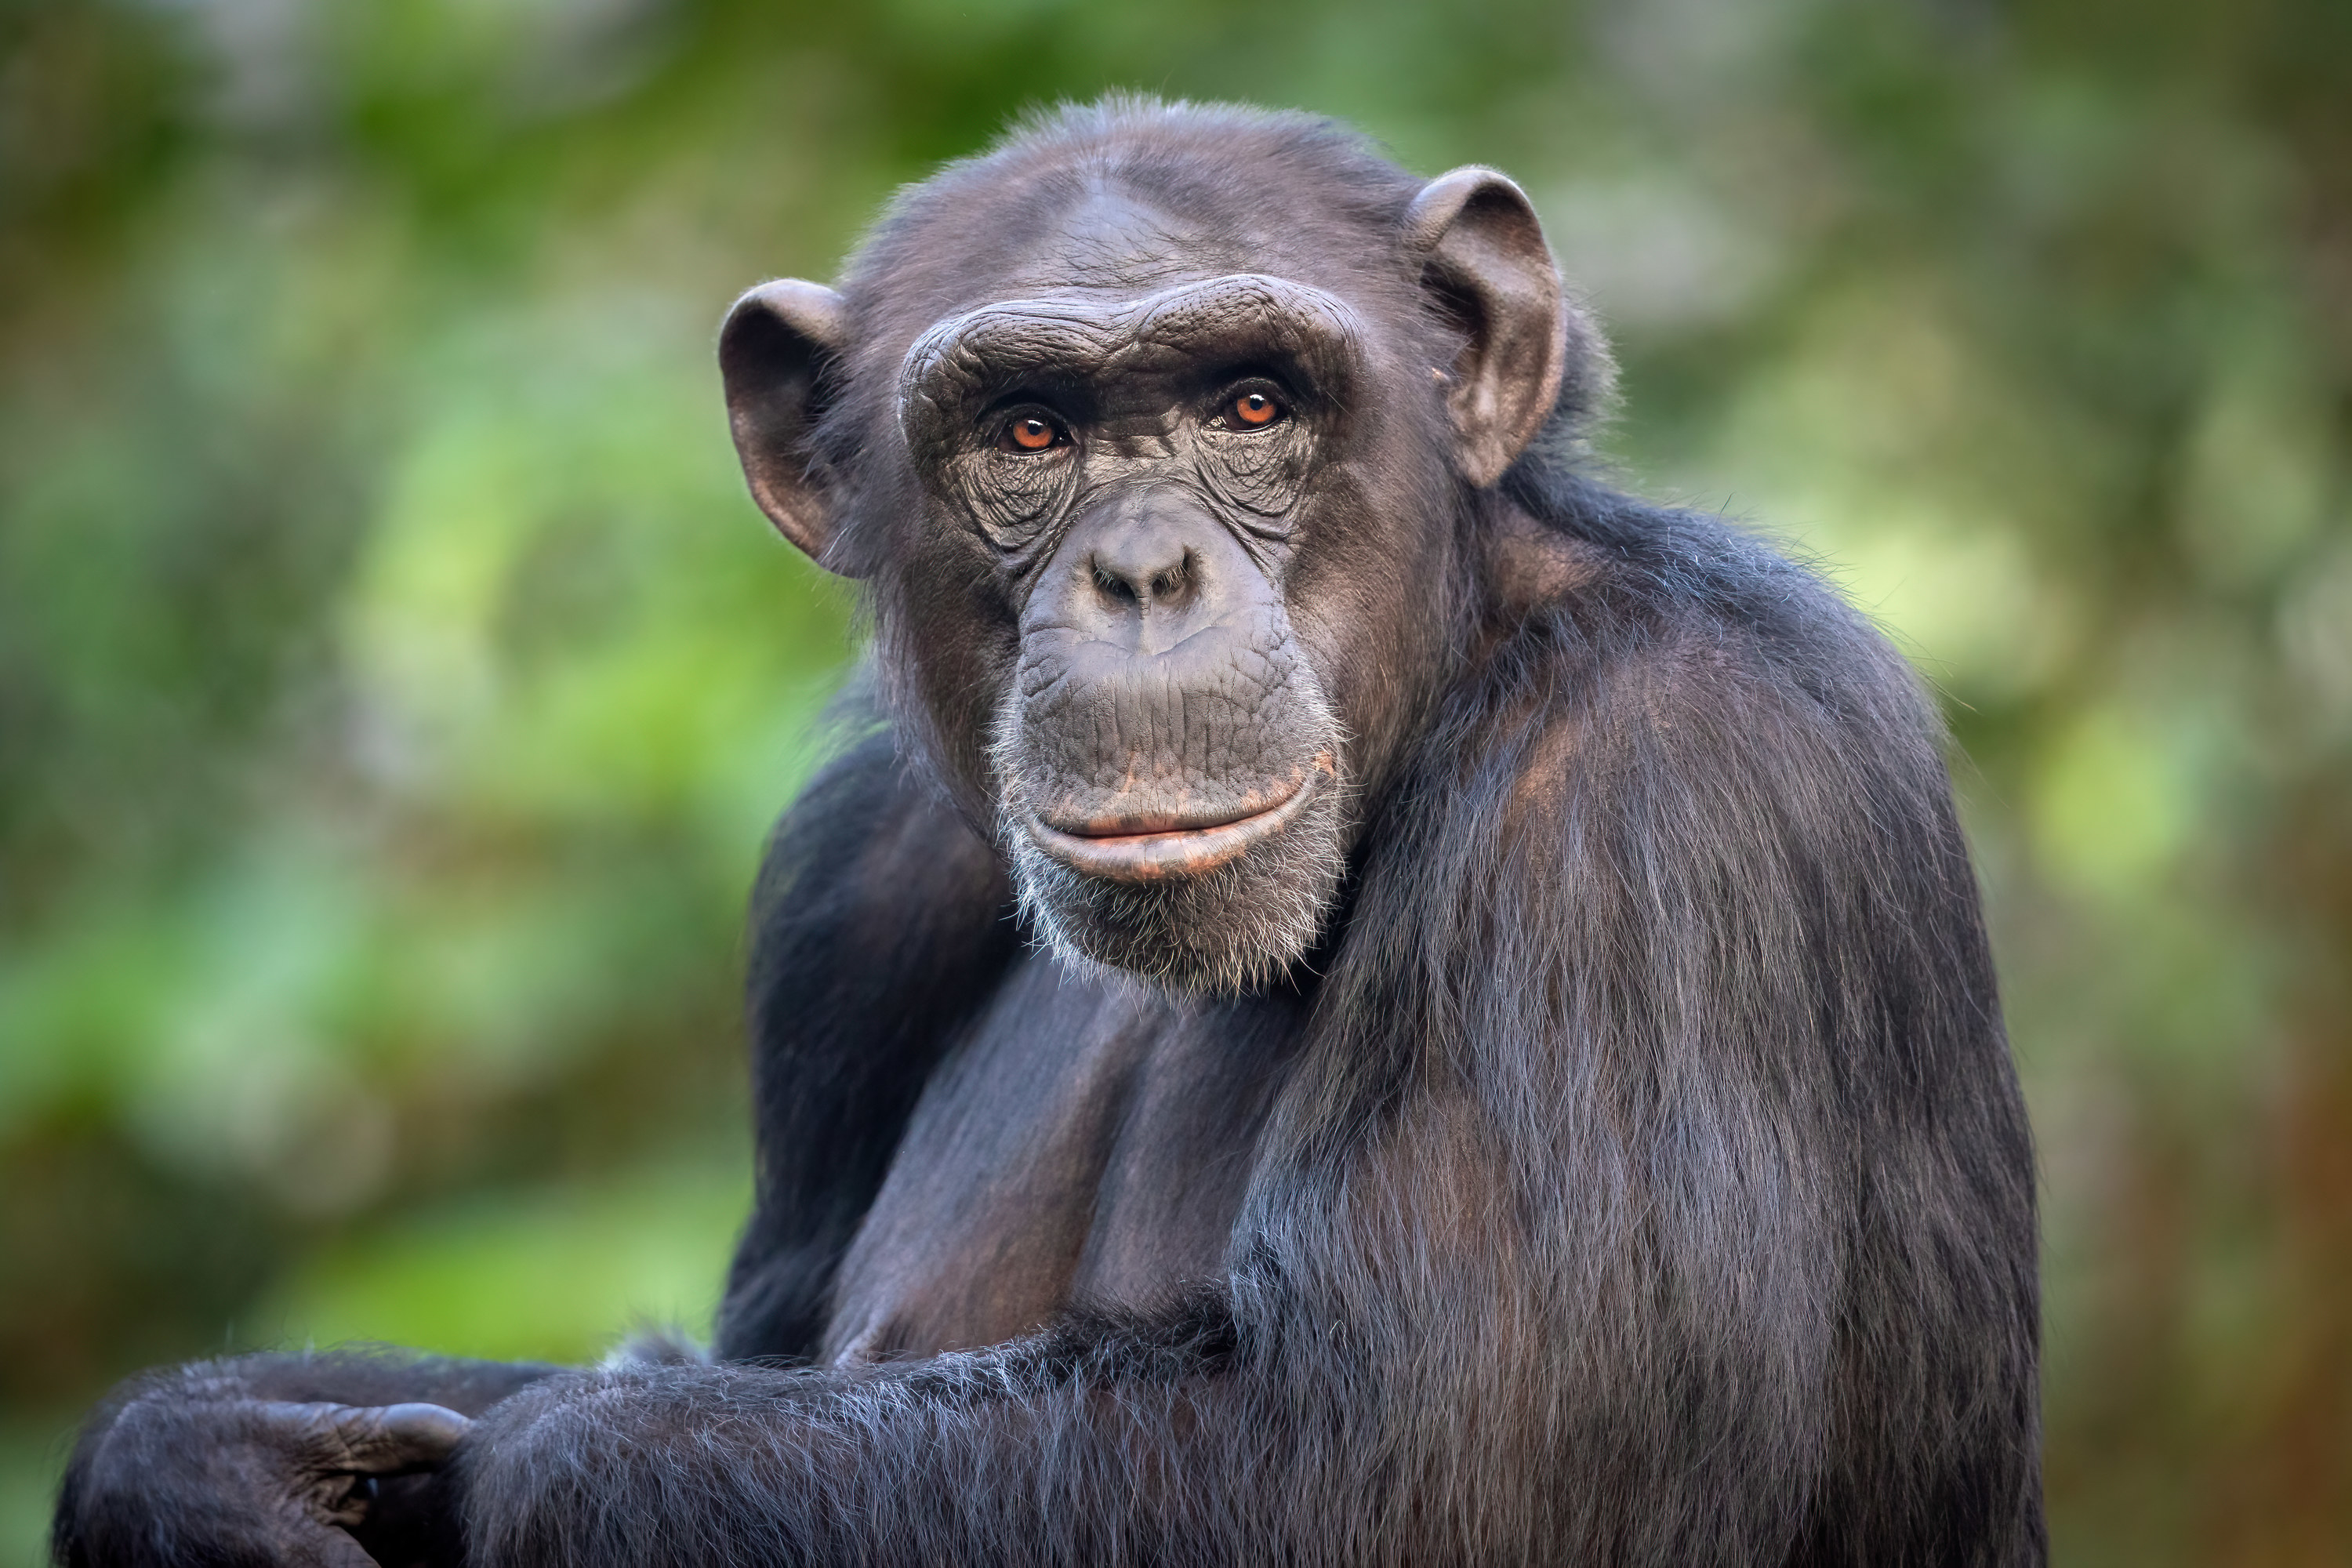 a chimpanzee outside looking toward the camera